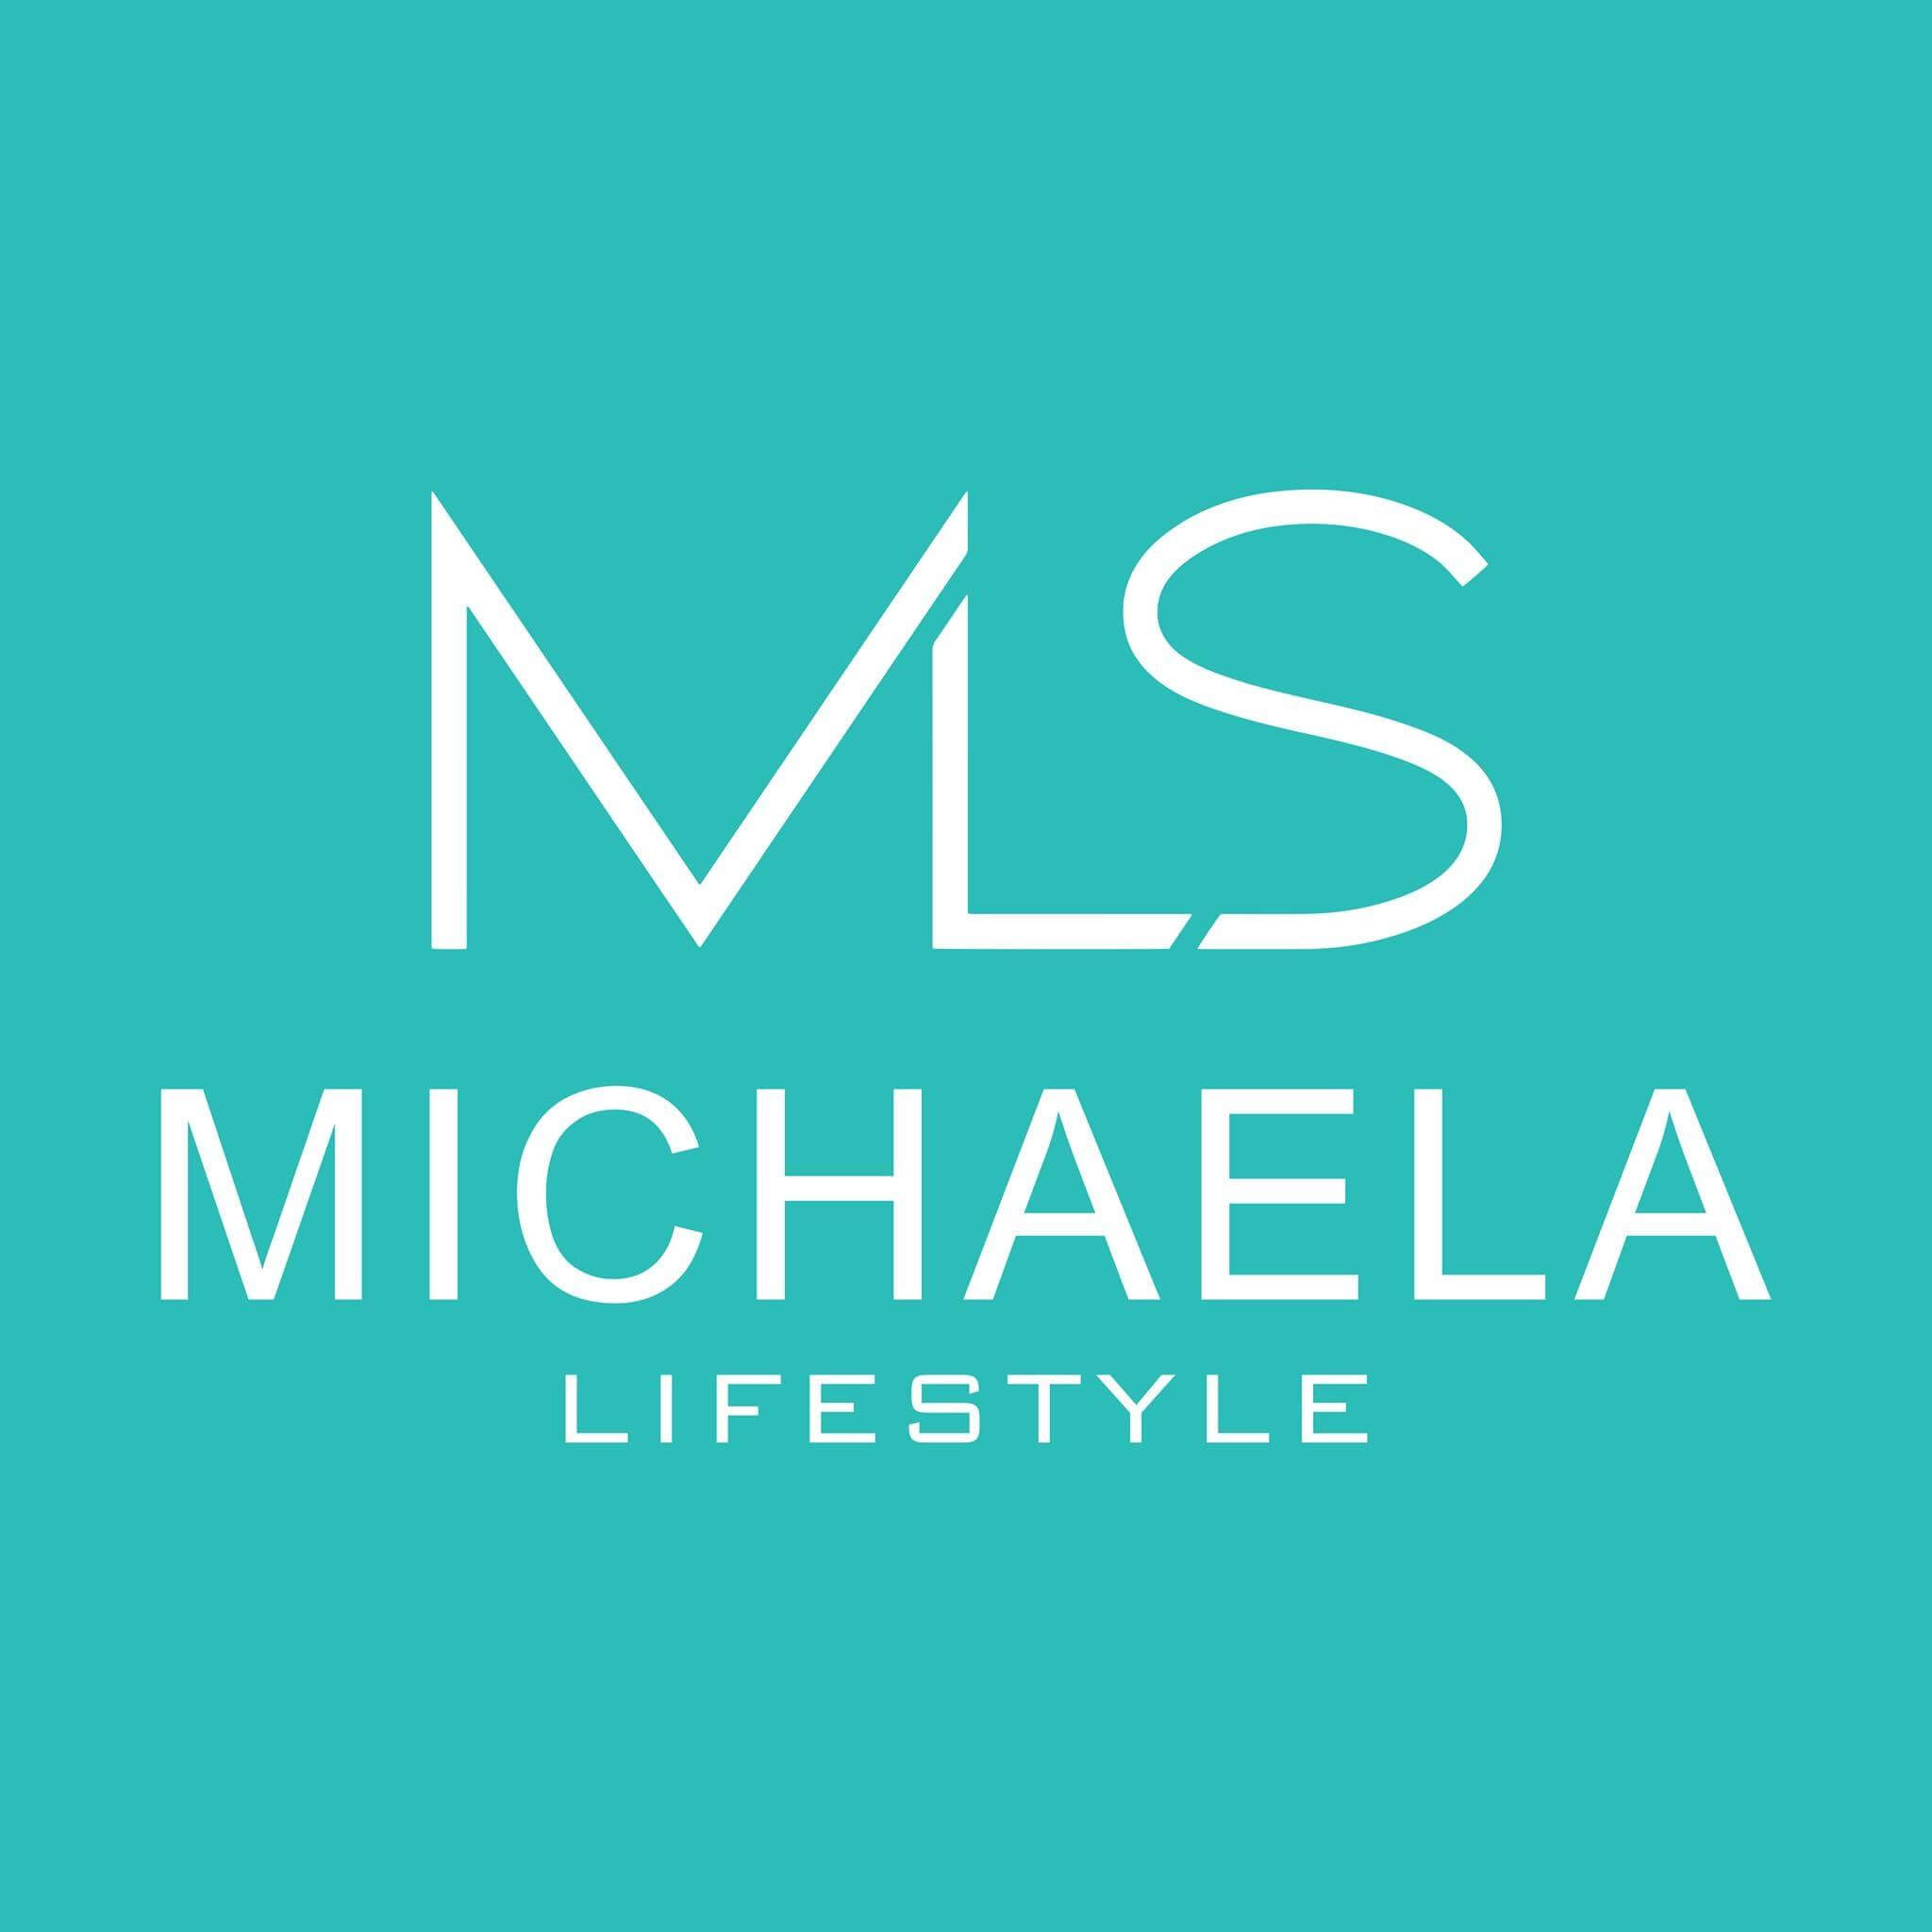 MICHAELA LIFESTYLE